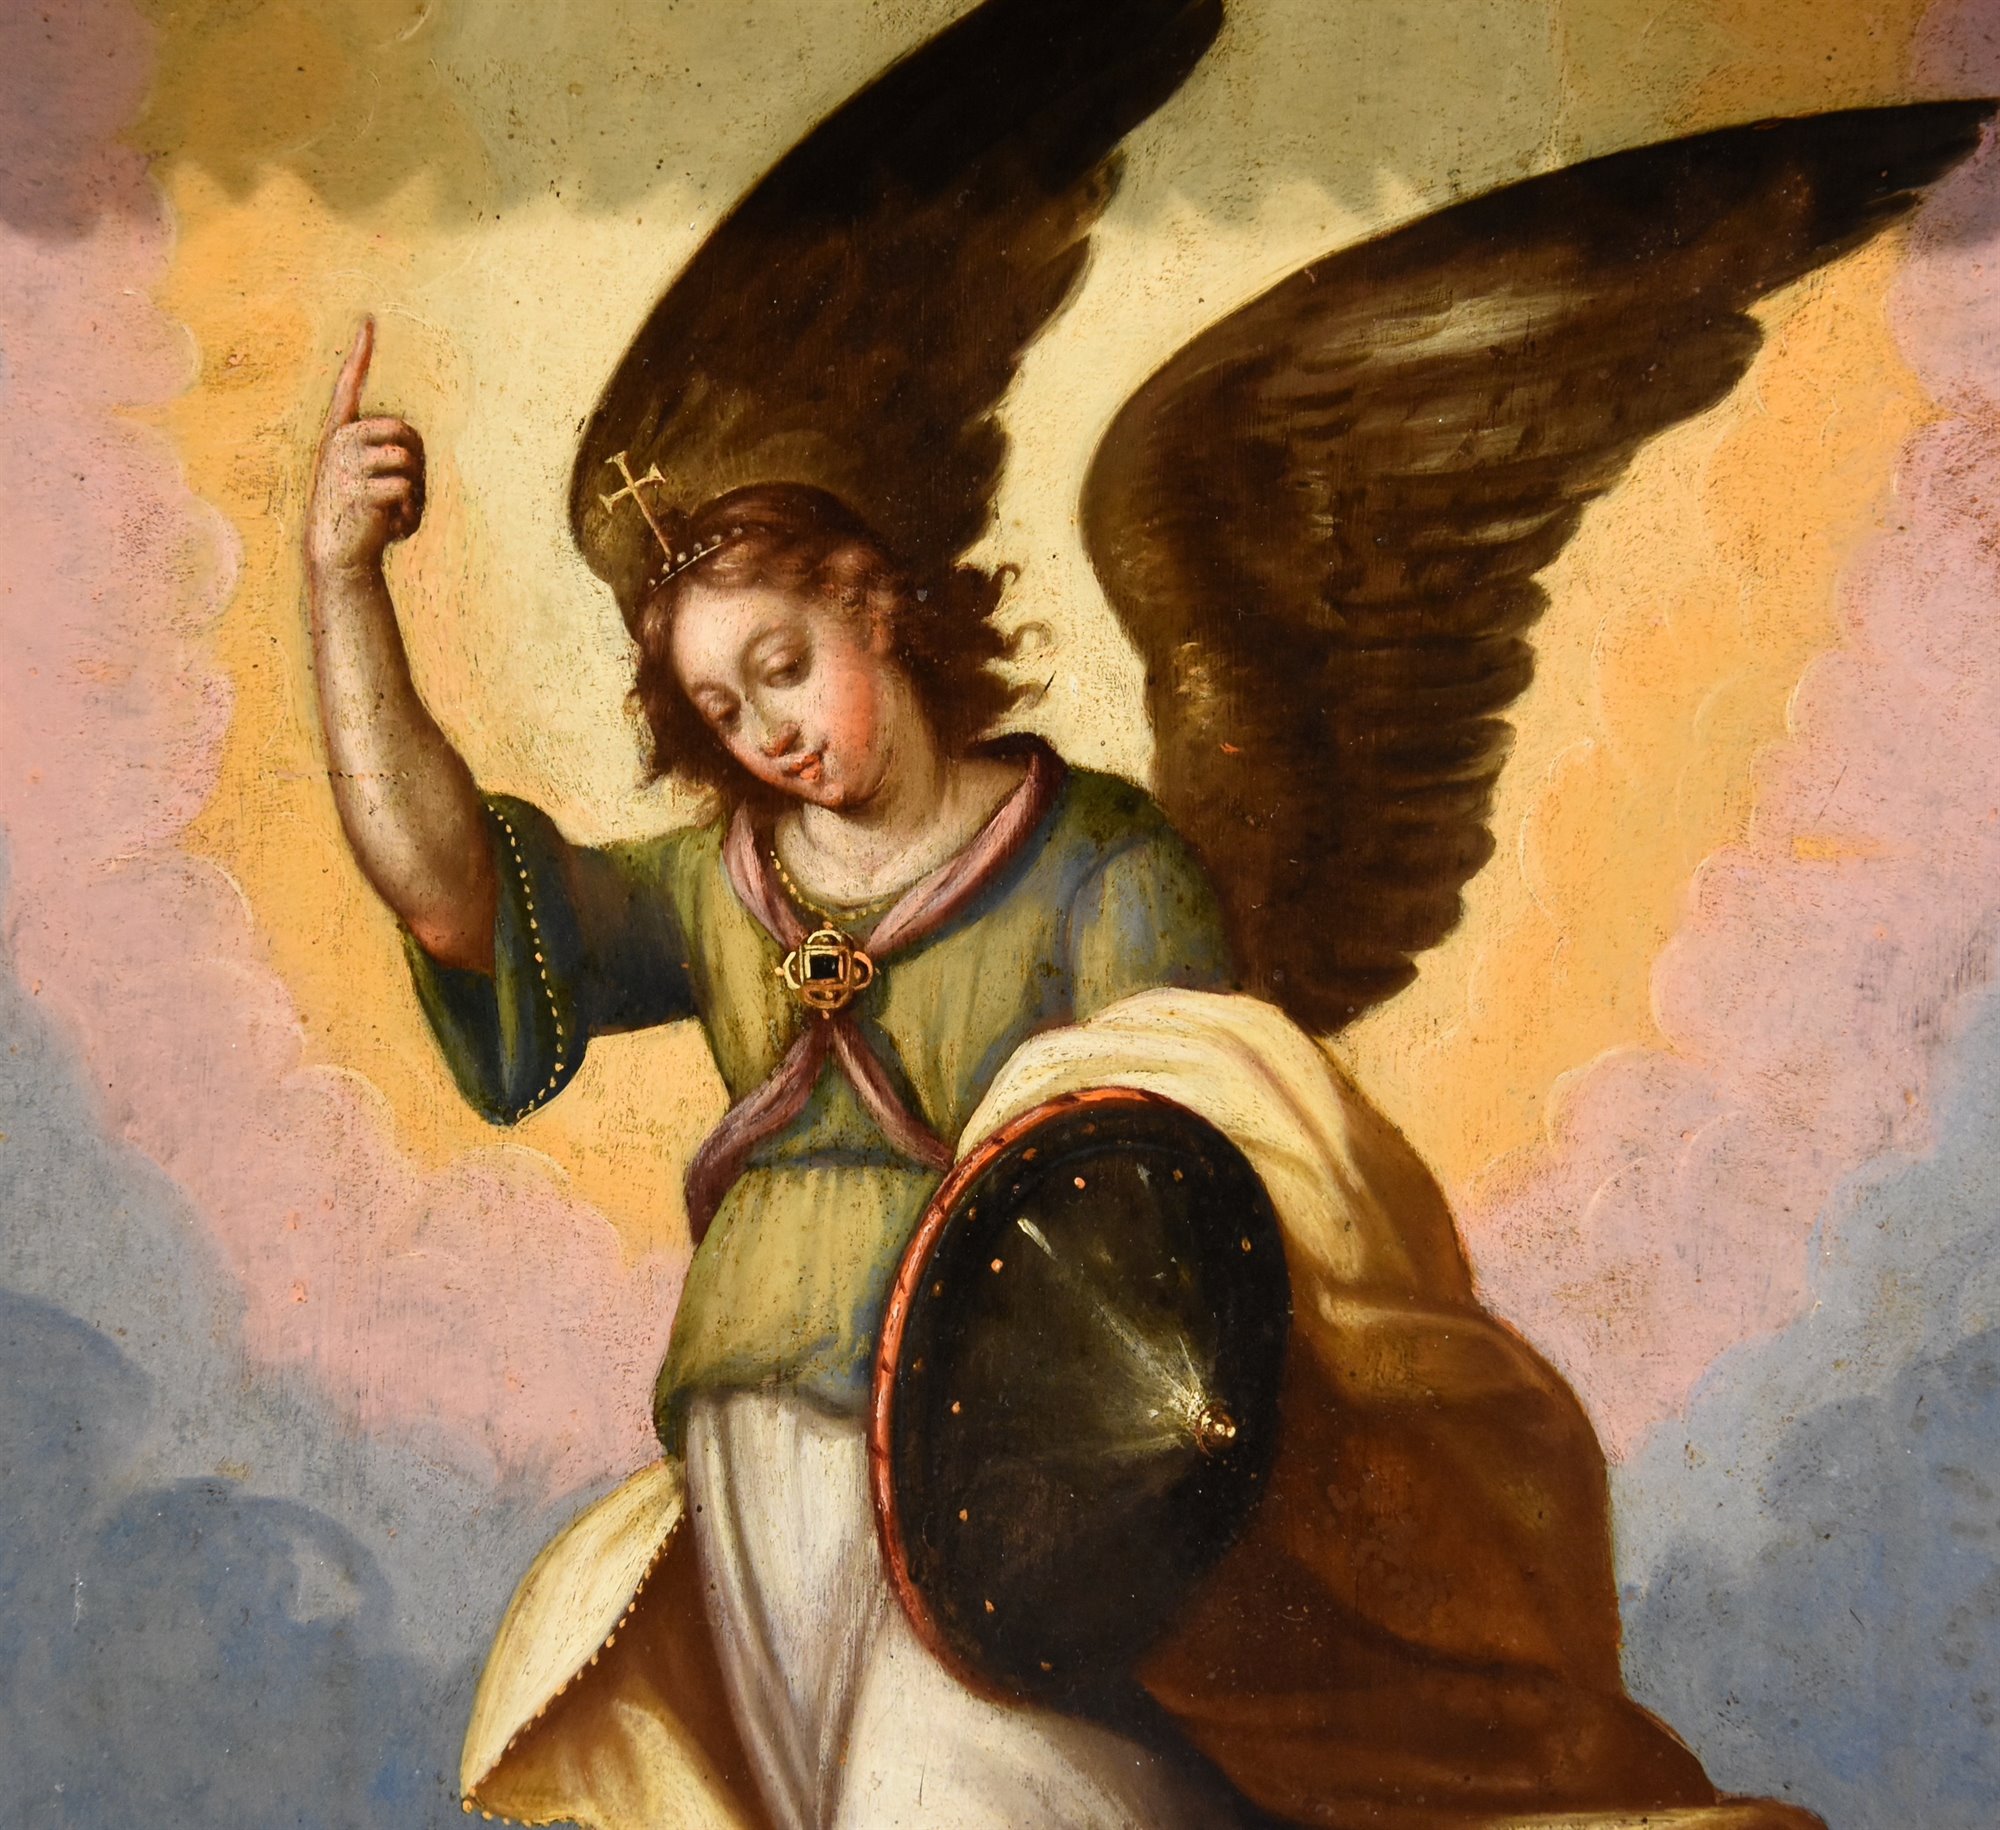 San Michele Arcangelo sconfigge il demonio